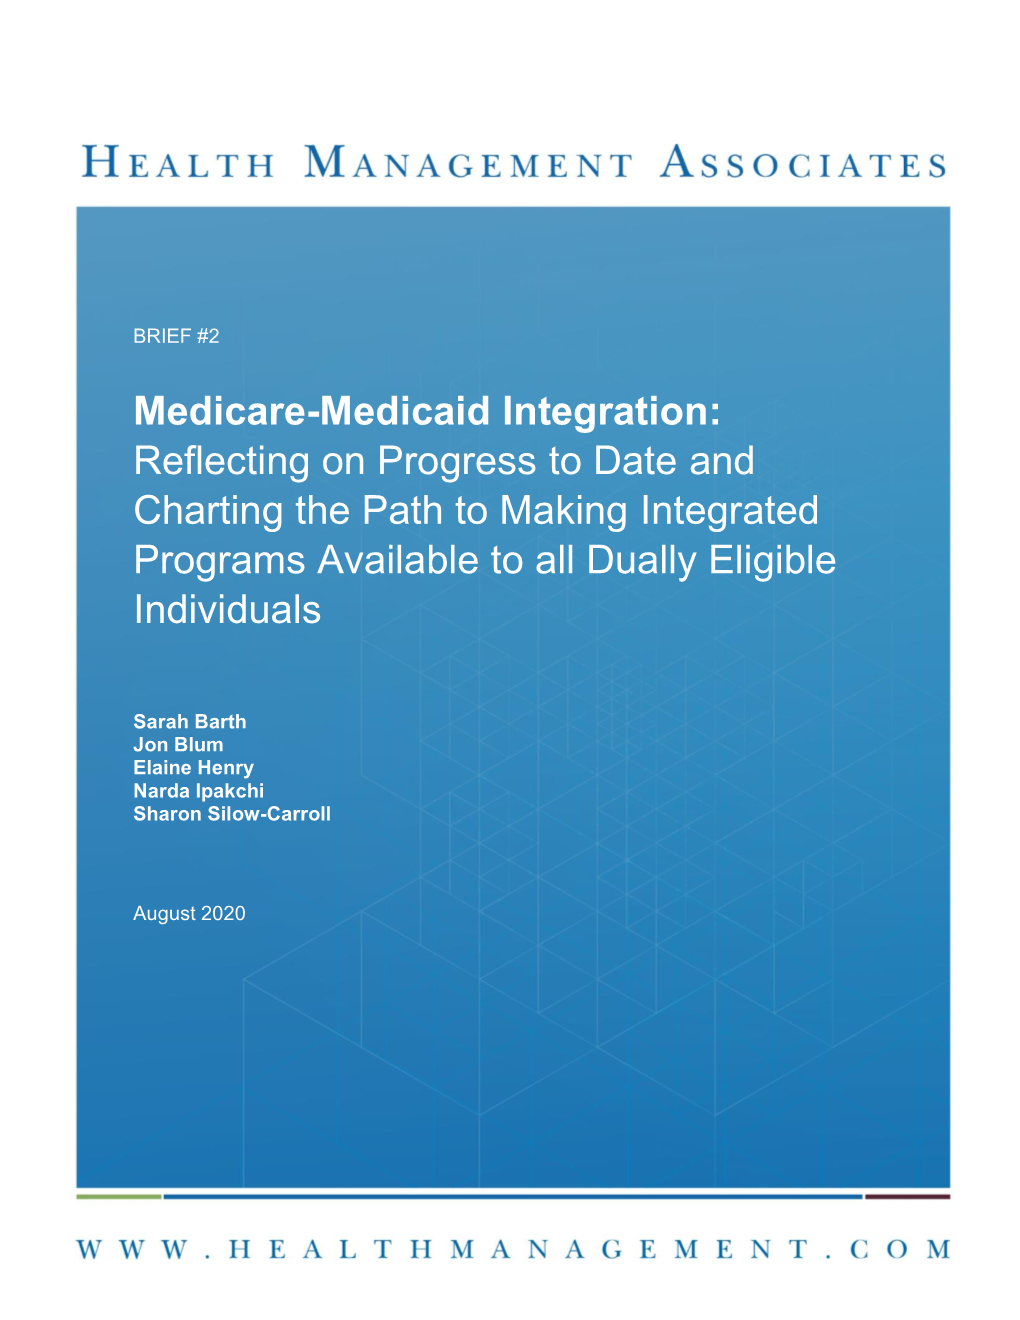 Medicare-Medicaid Integration